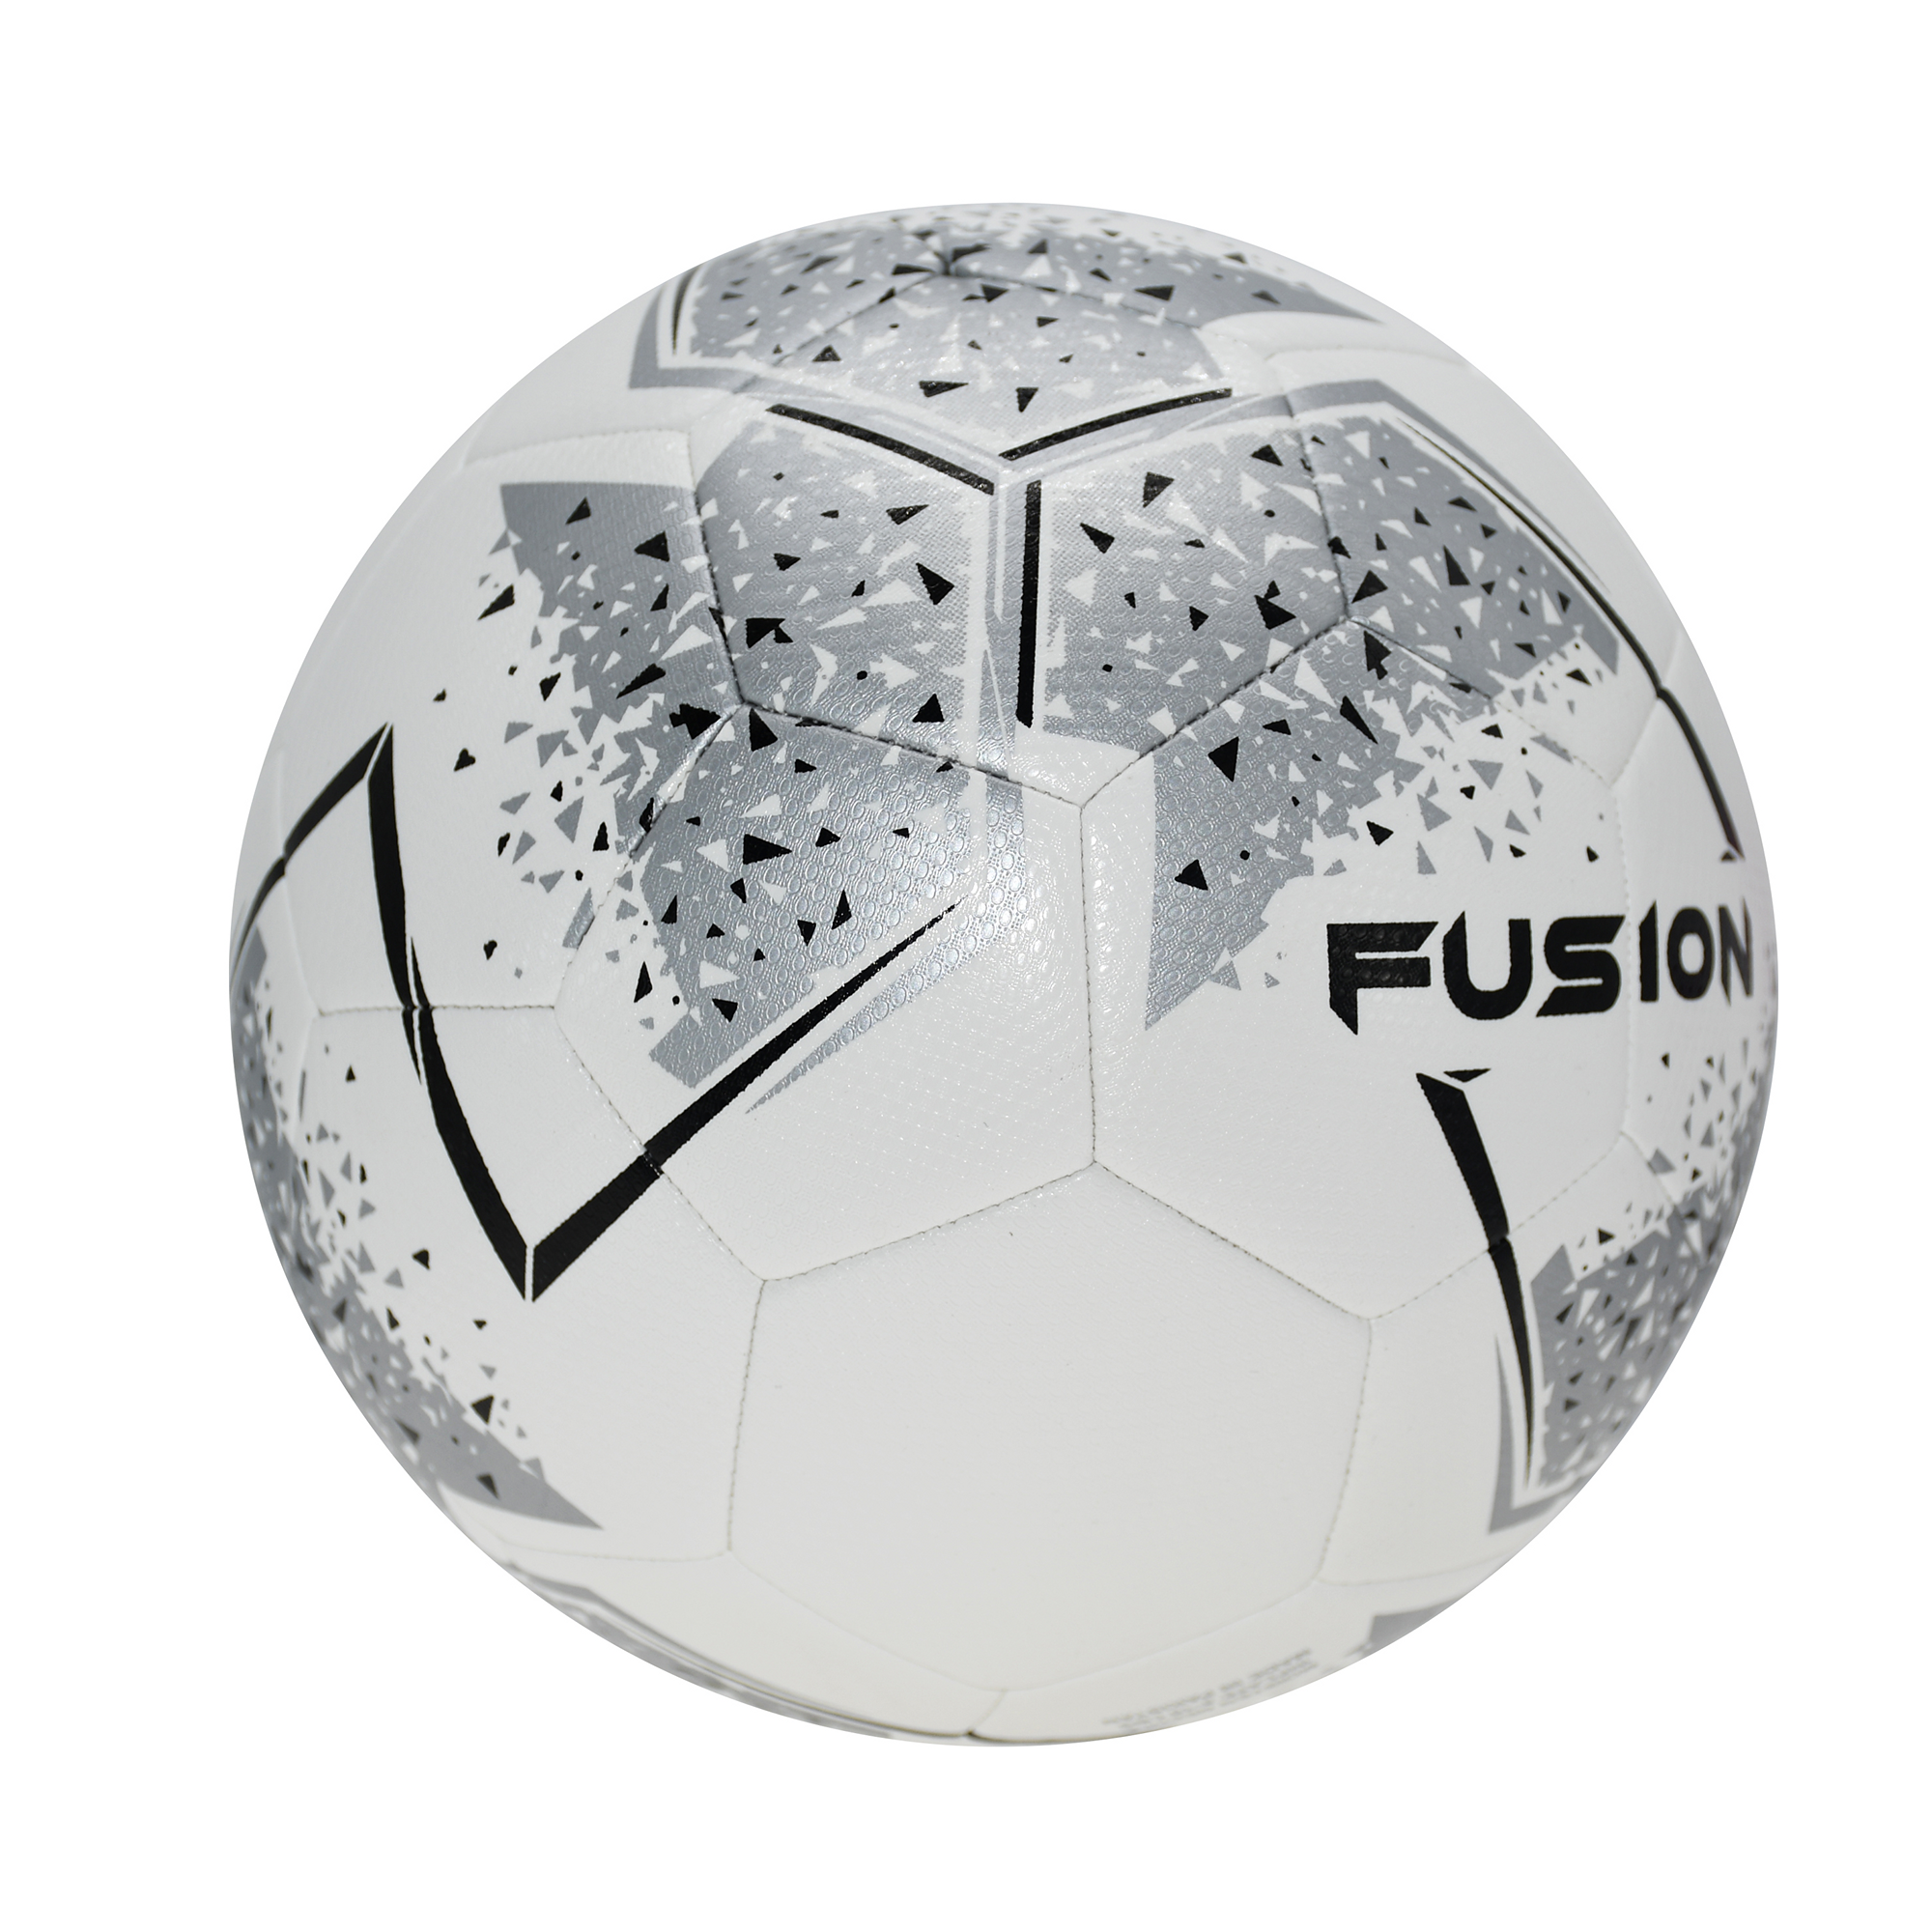 Precision Fusion Training Ball Size 5 